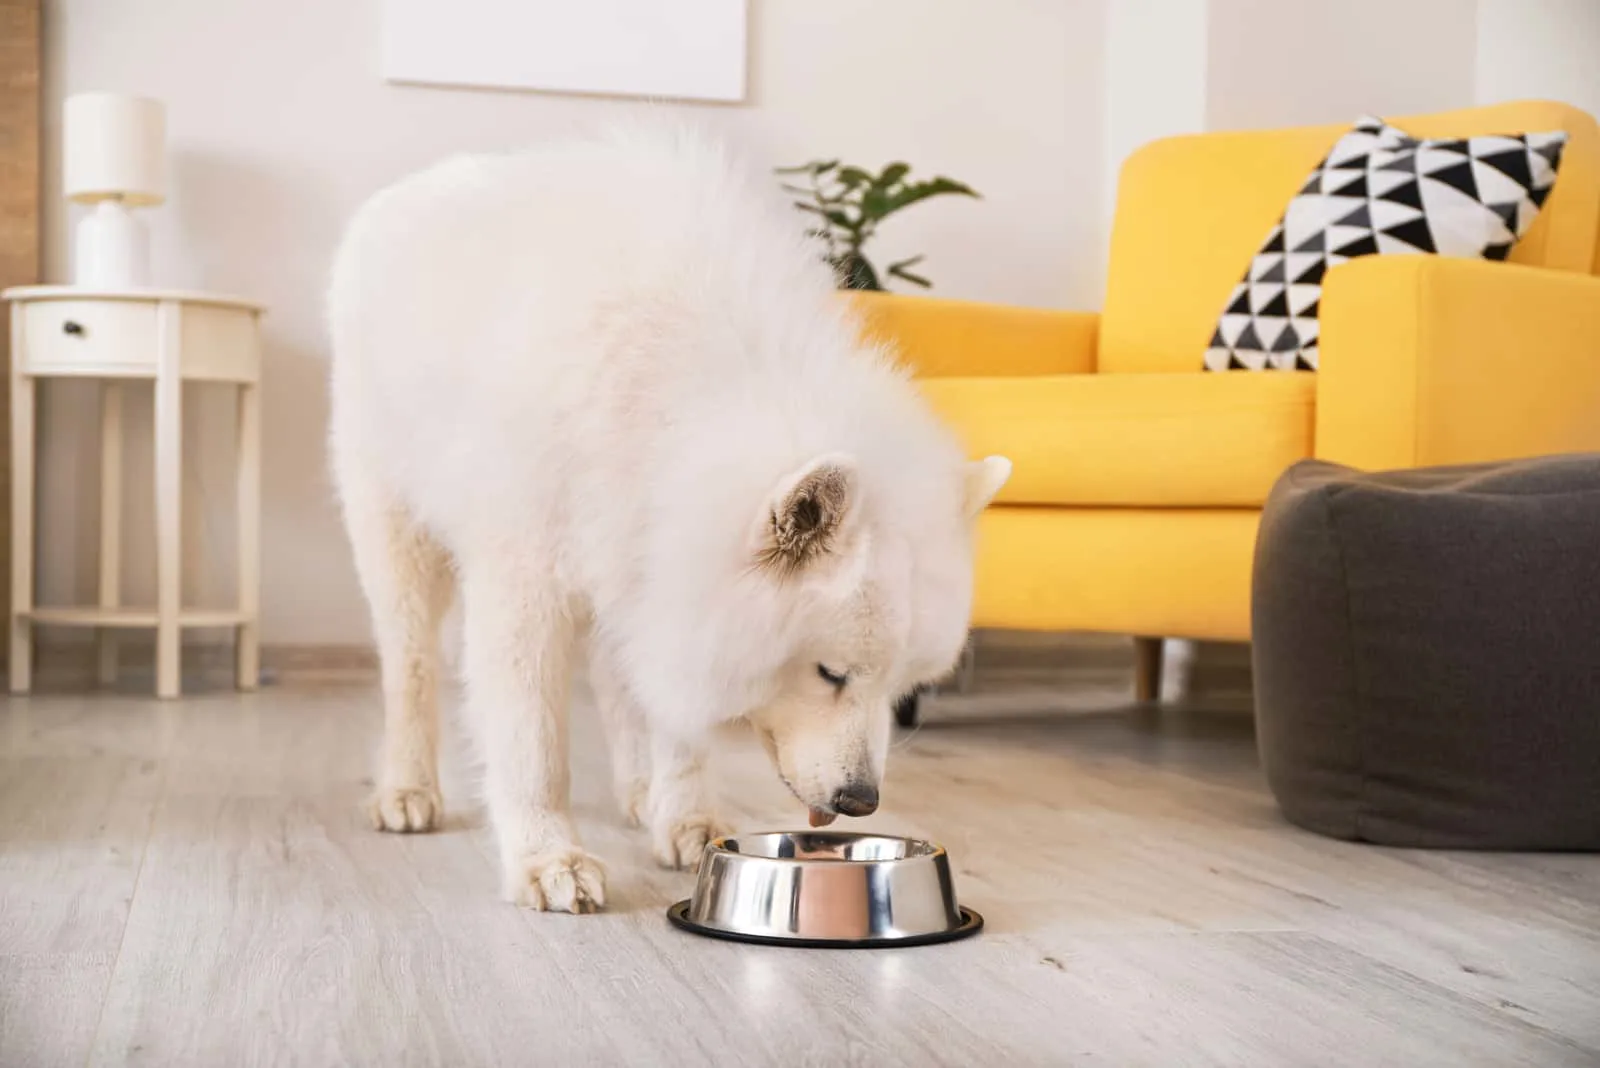 Samoyed dog eating from bowl at home